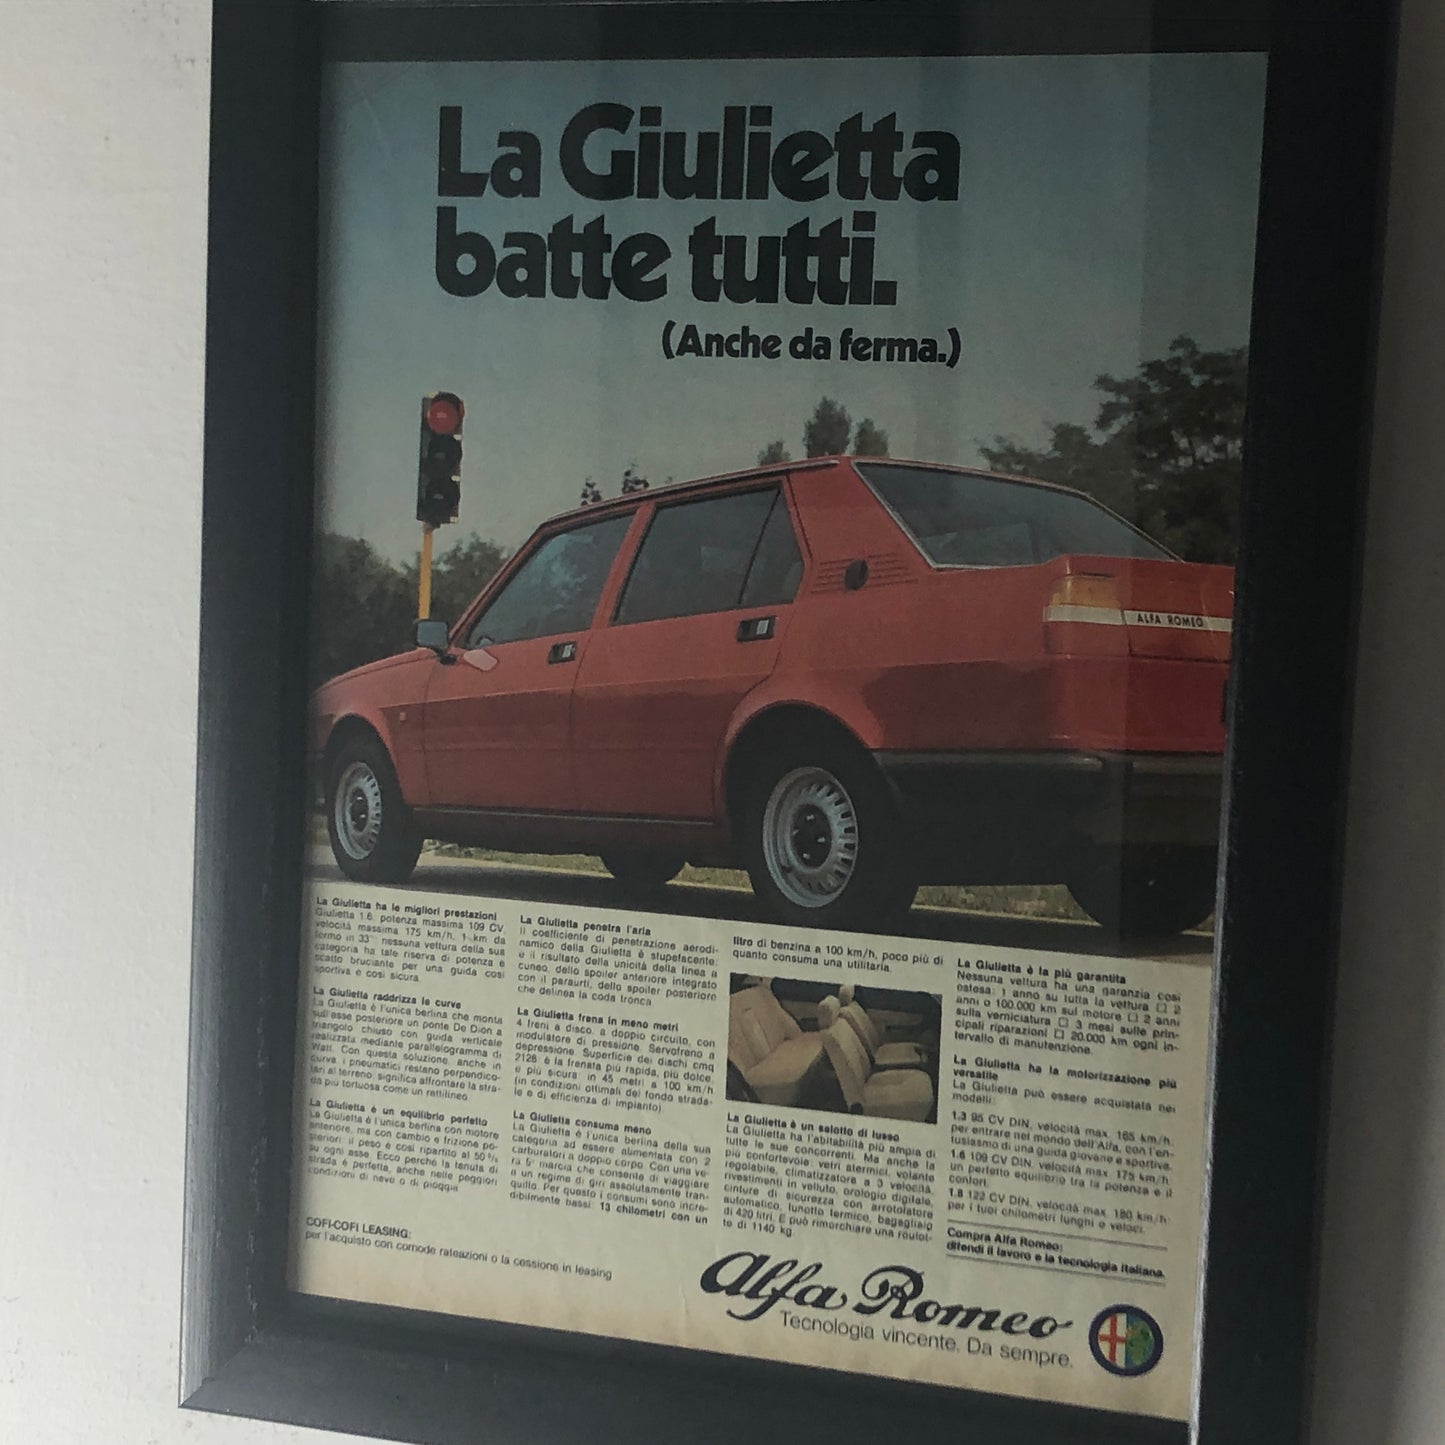 Alfa Romeo, Advertising Year 1981 the Giulietta Beats Everyone Even When Standstill